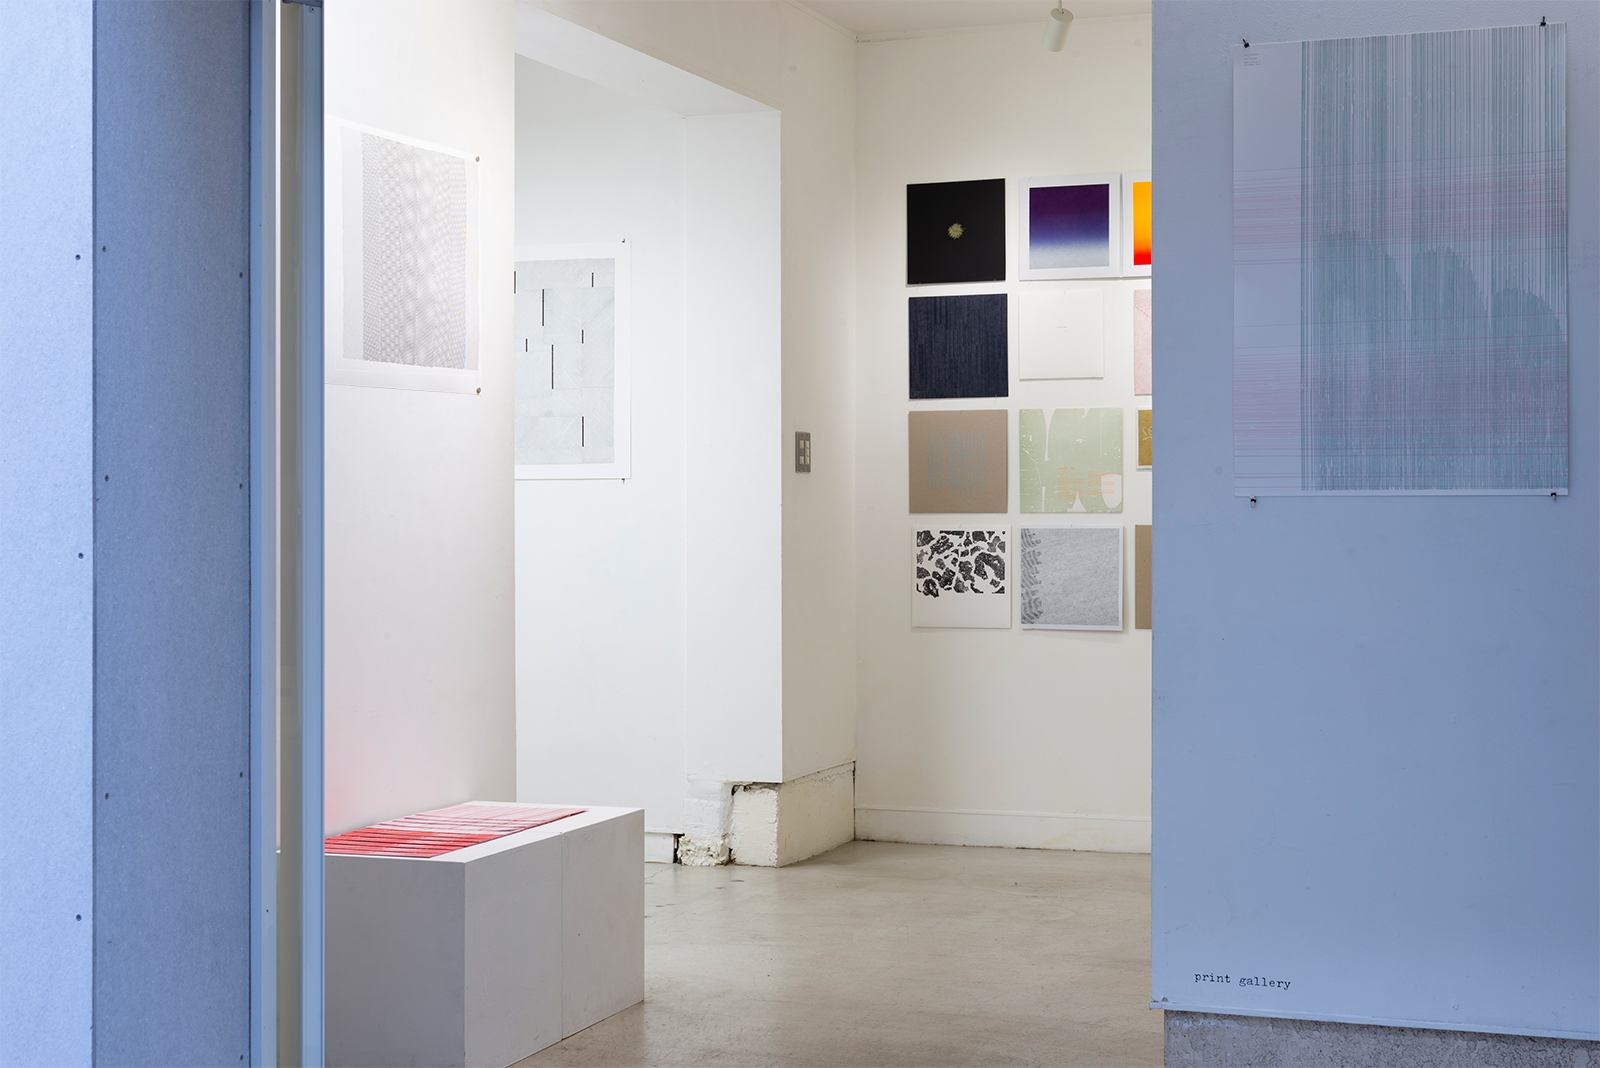 Incunabula:
David Maurissen/vlek at print gallery Tokyo